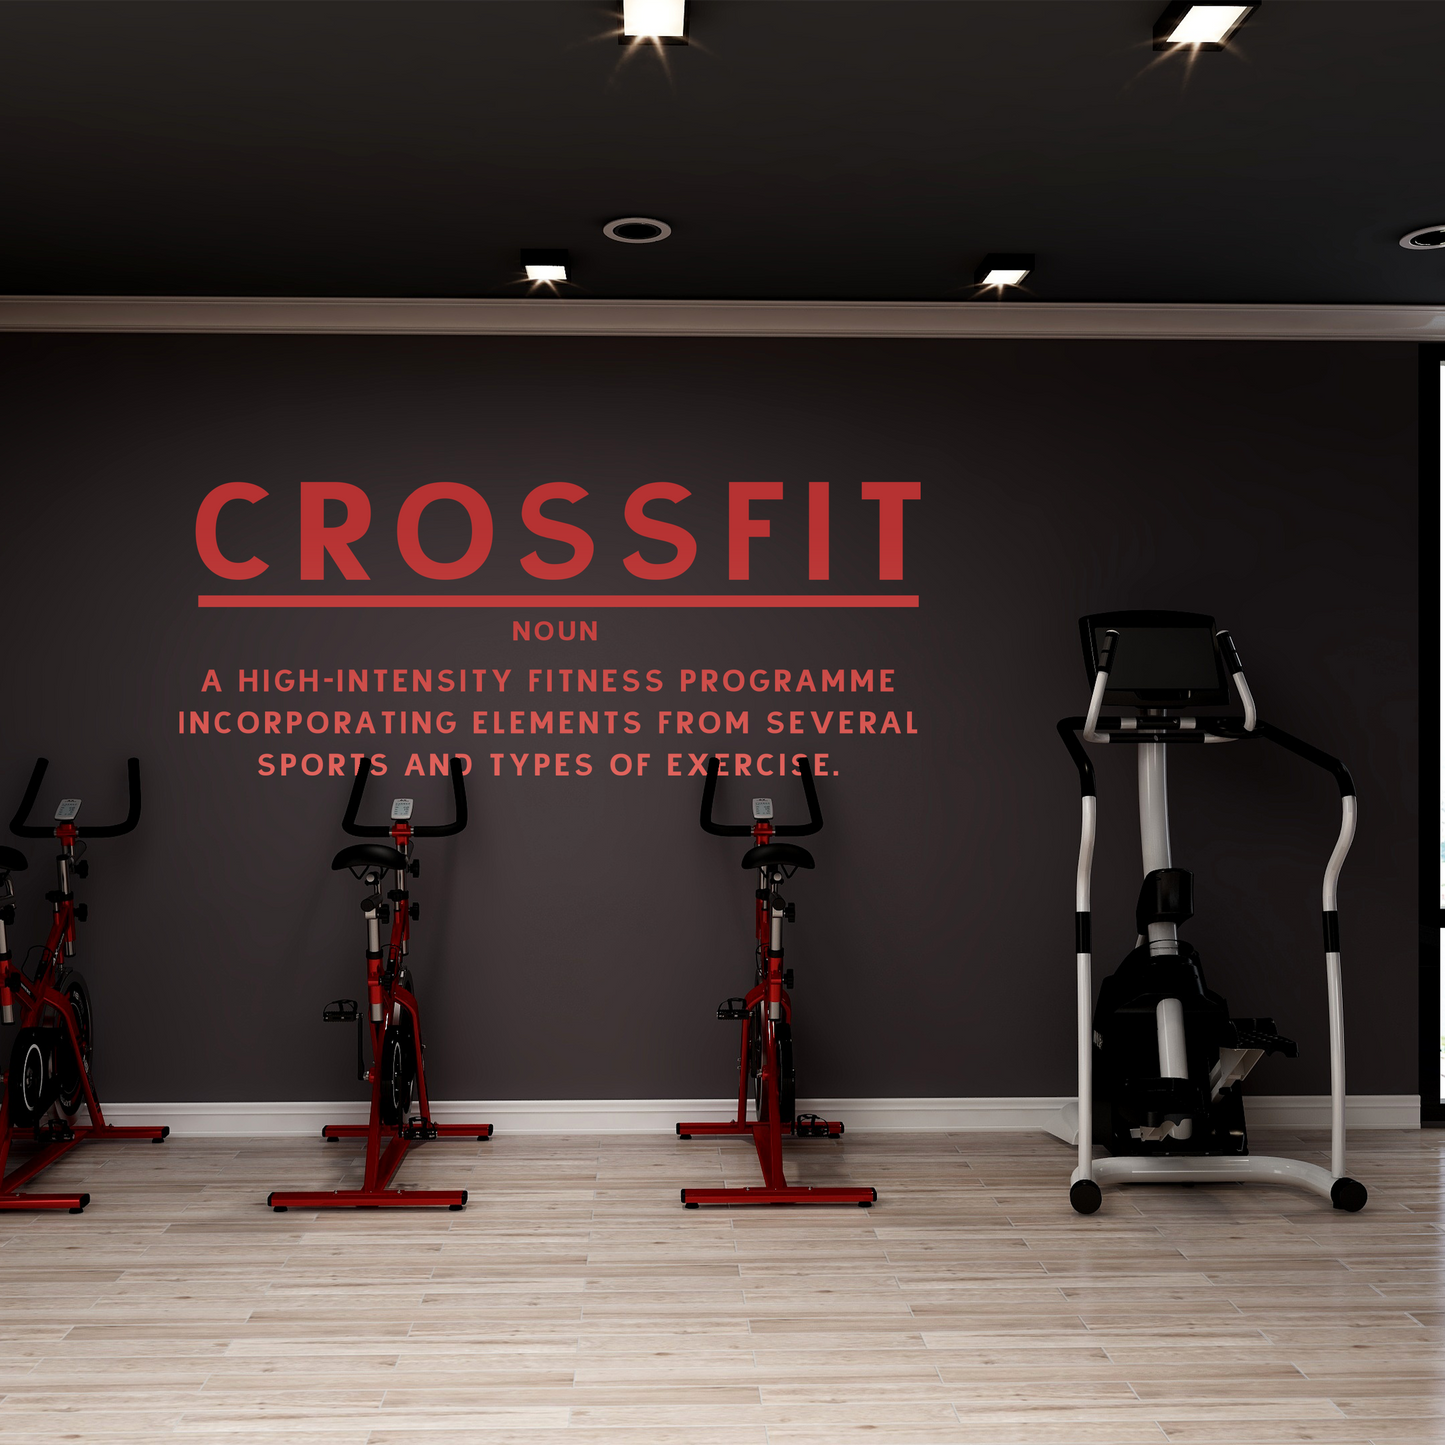 CrossFit Gym Wall Sticker Decal